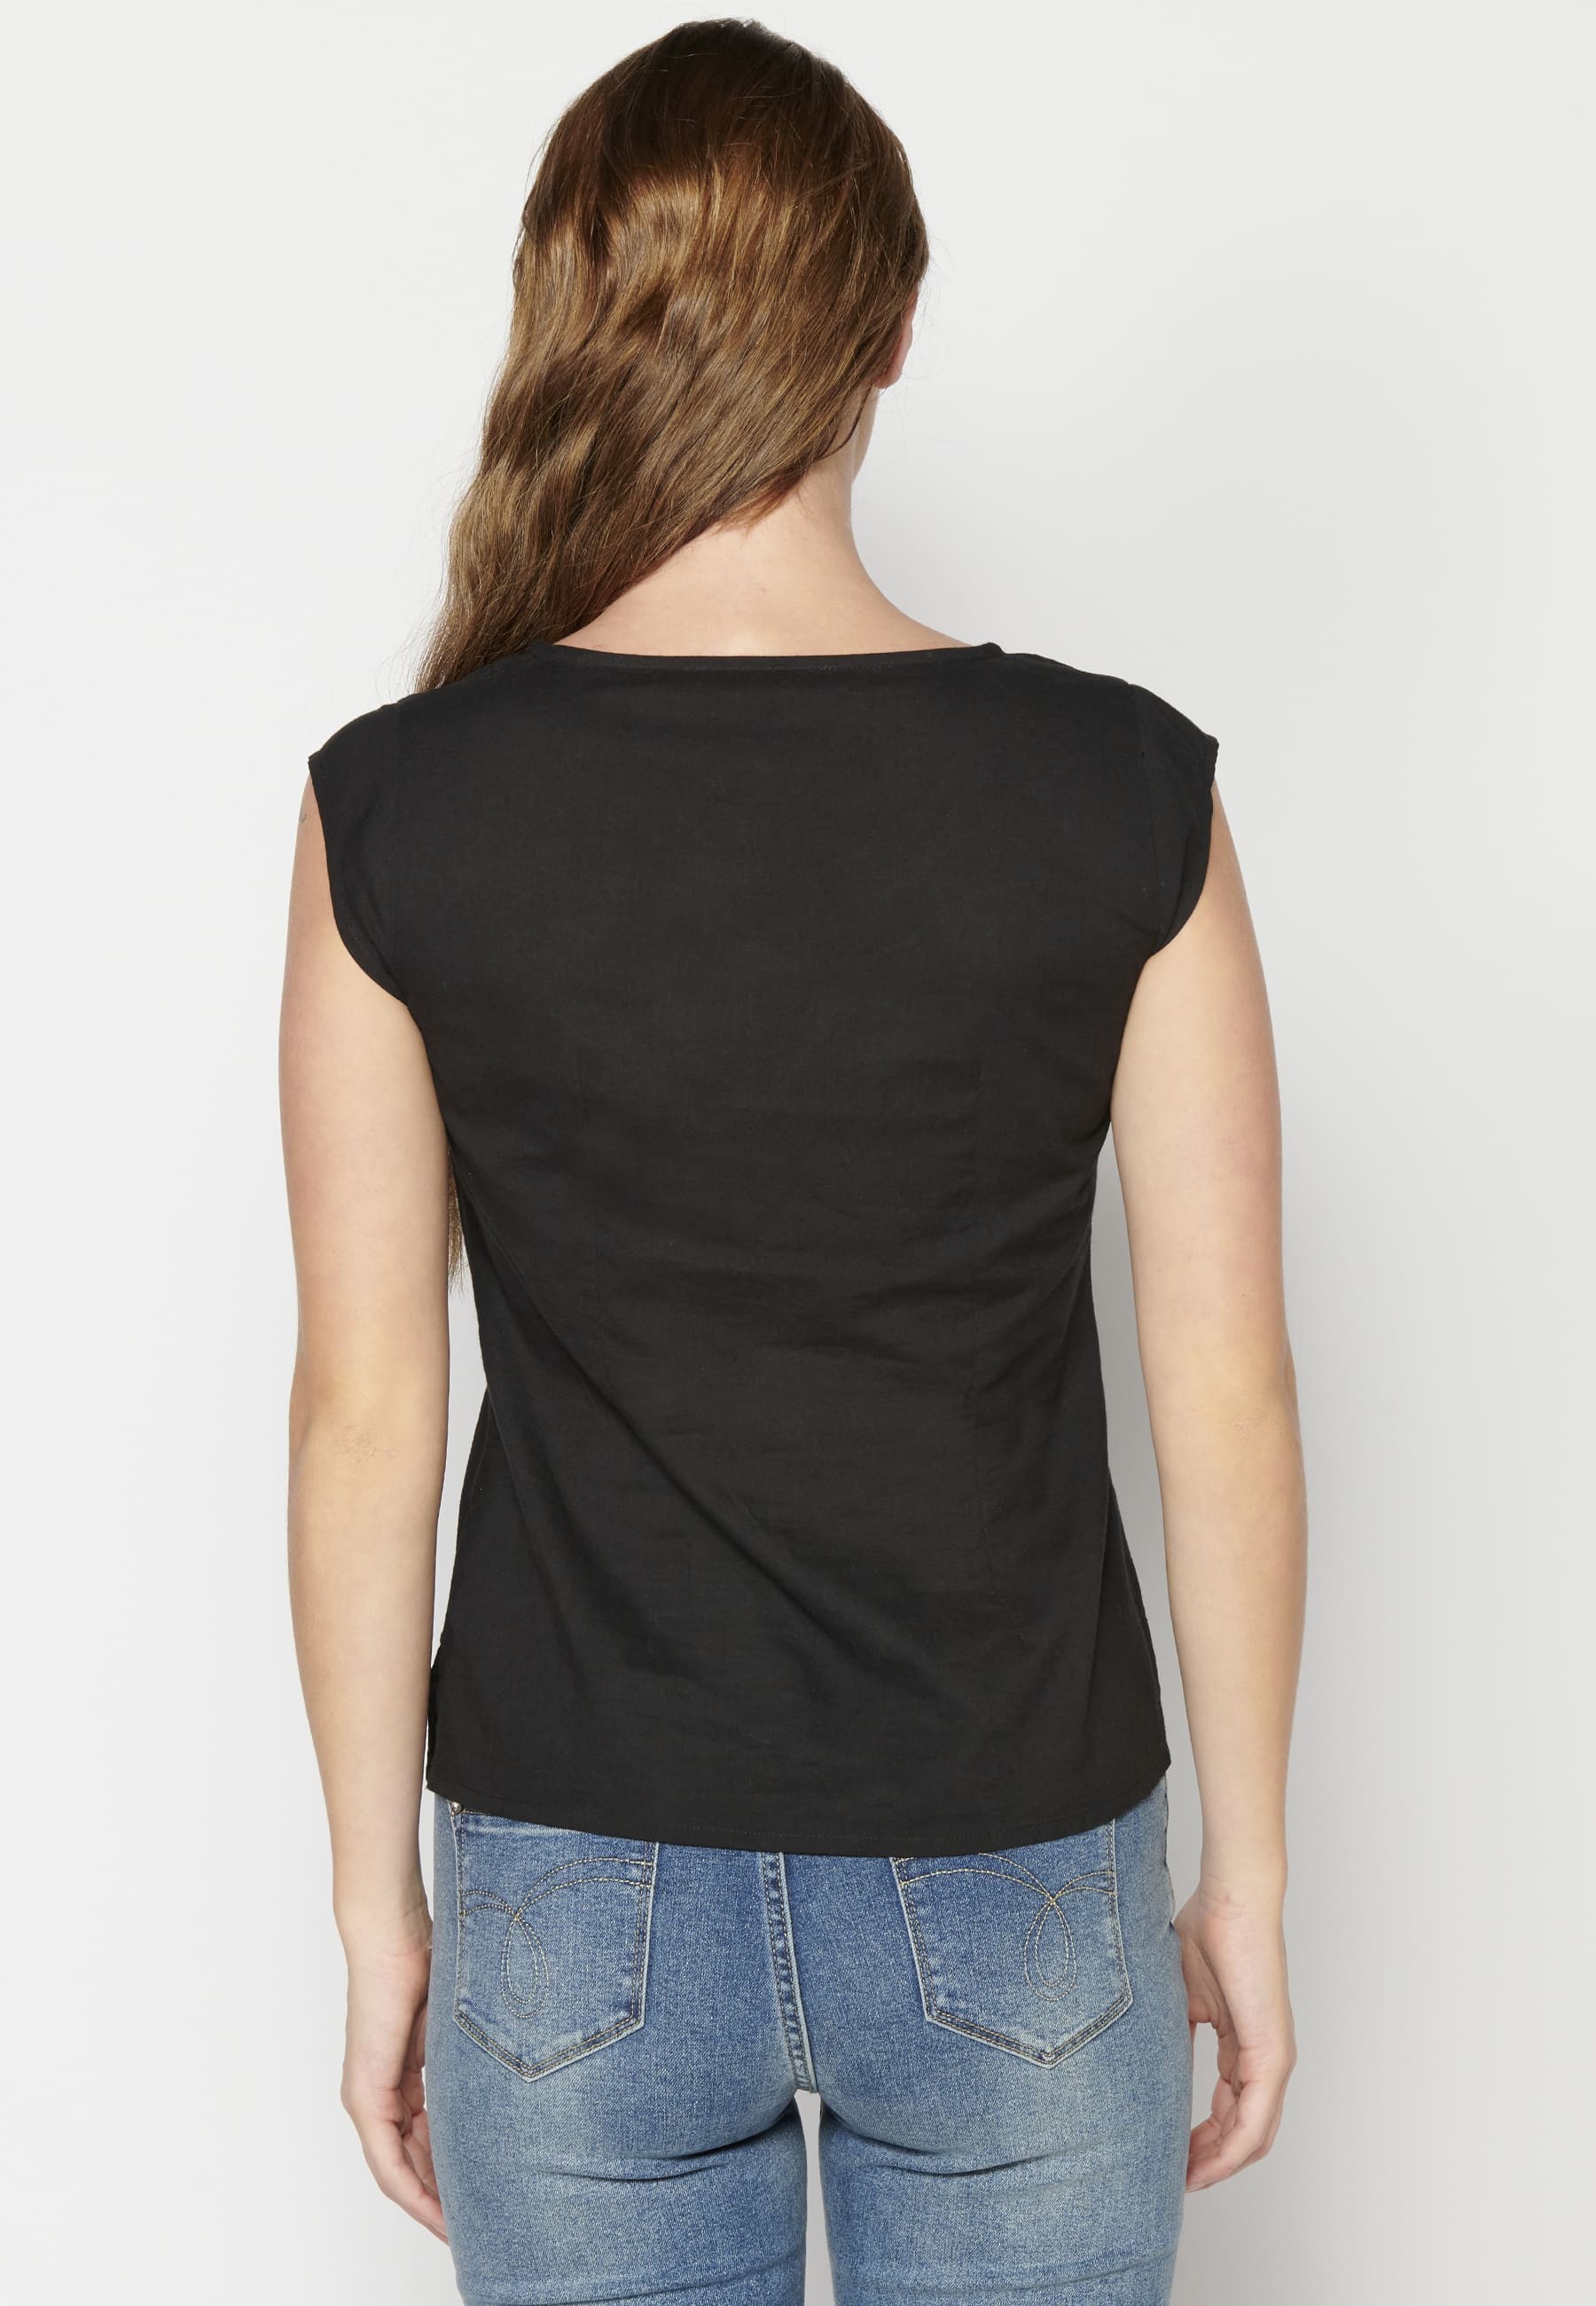 Blusa manga corta de Algodón de color Negro para Mujer